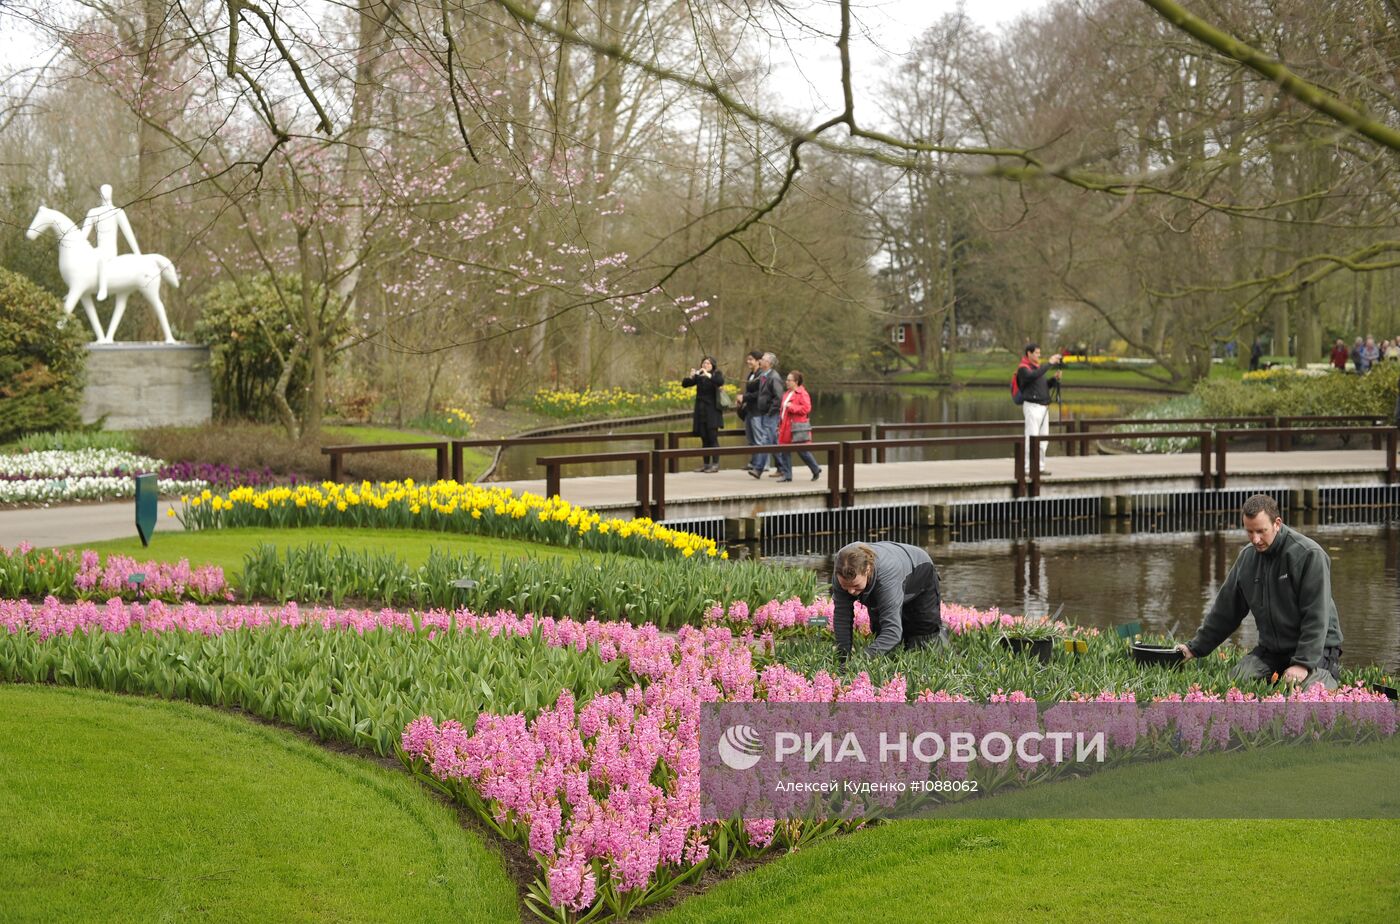 Парк цветов Кекенхоф в Нидерландах